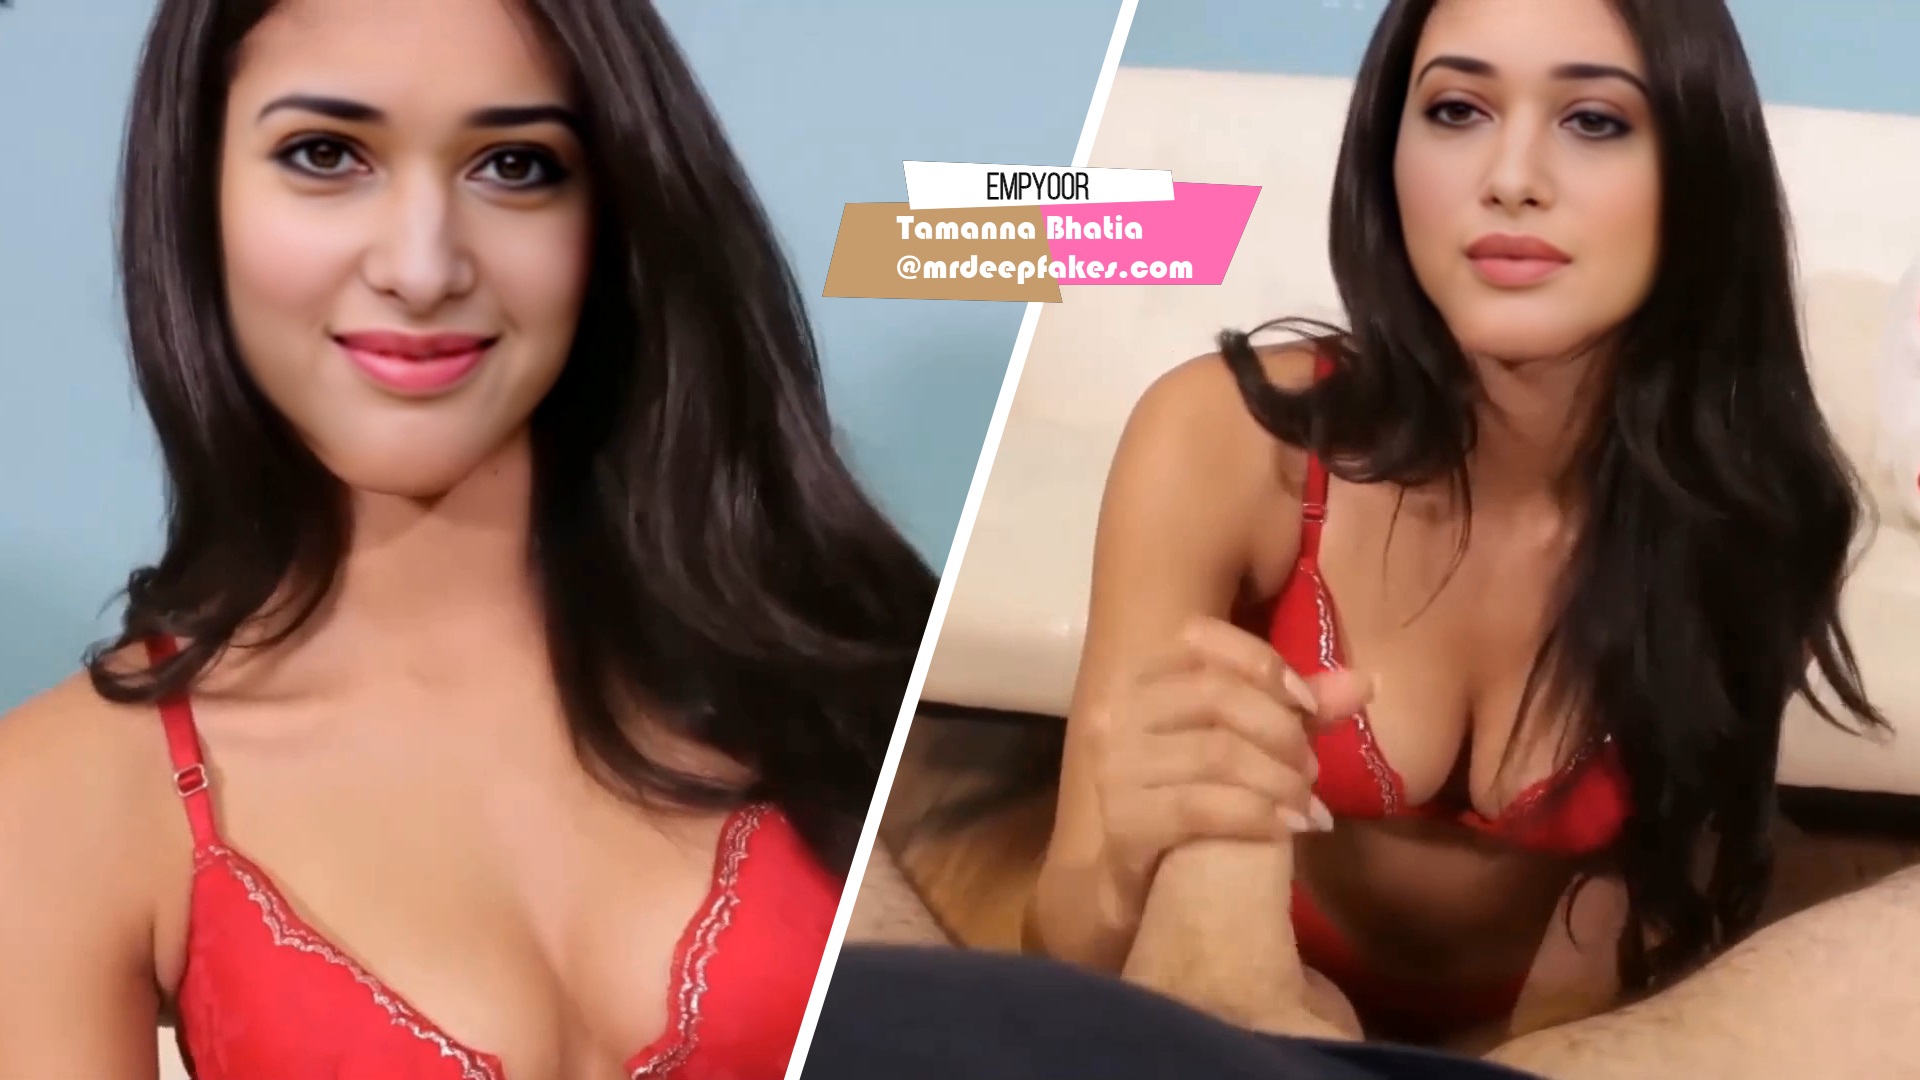 Bollywood Handjob - Tamanna Bhatia Handjob DeepFake Porn - MrDeepFakes